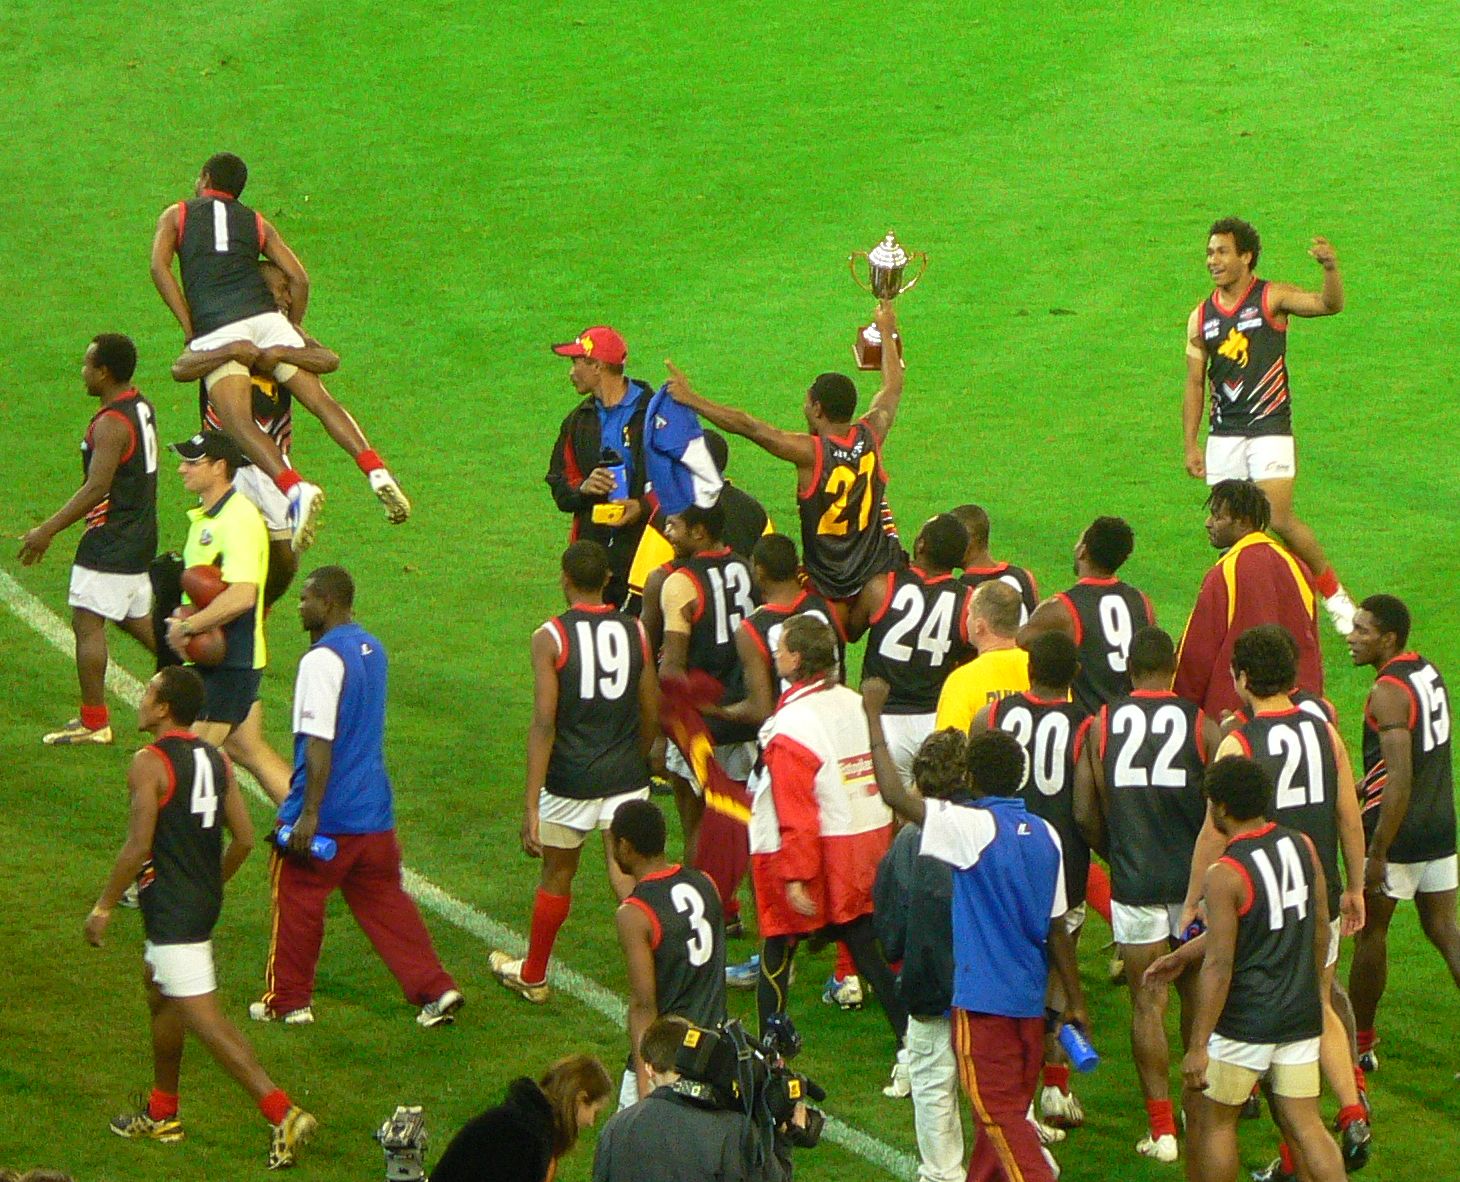 Australian rules football in Papua New Guinea